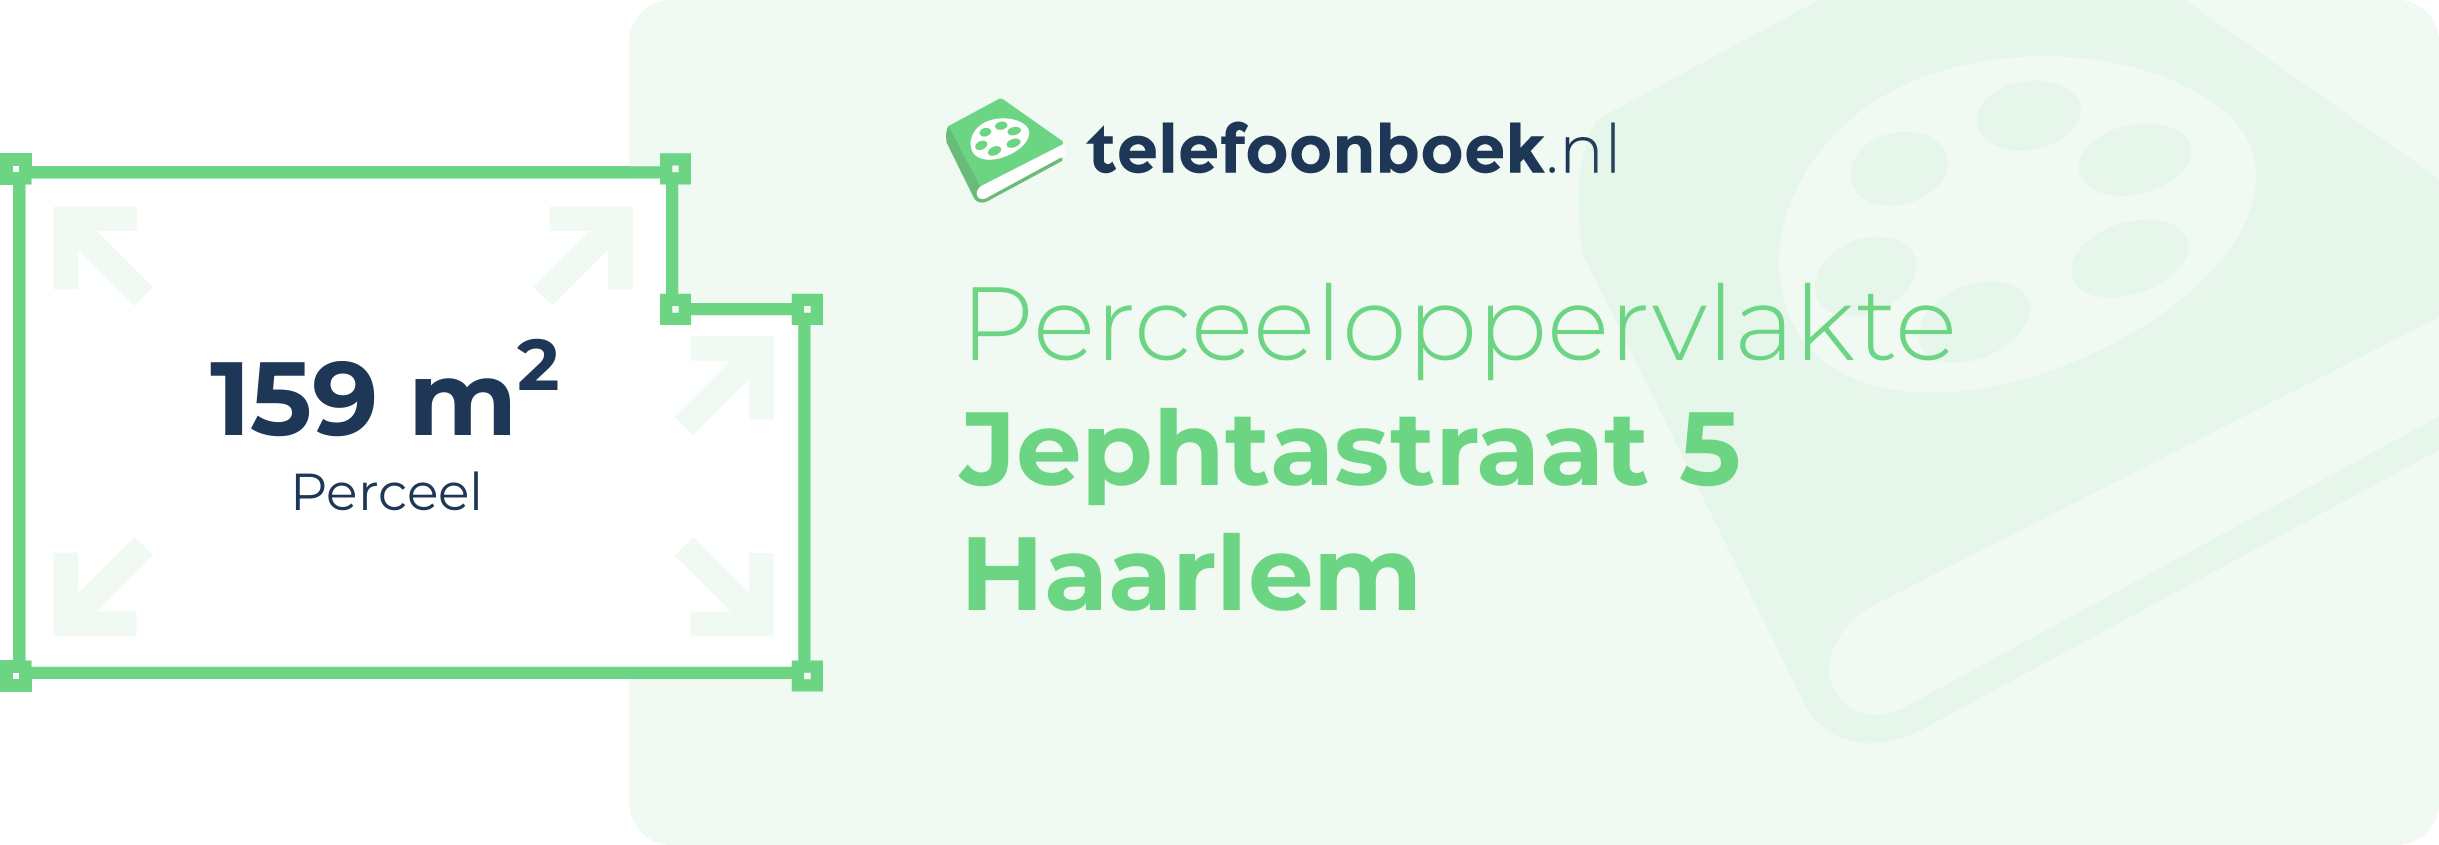 Perceeloppervlakte Jephtastraat 5 Haarlem